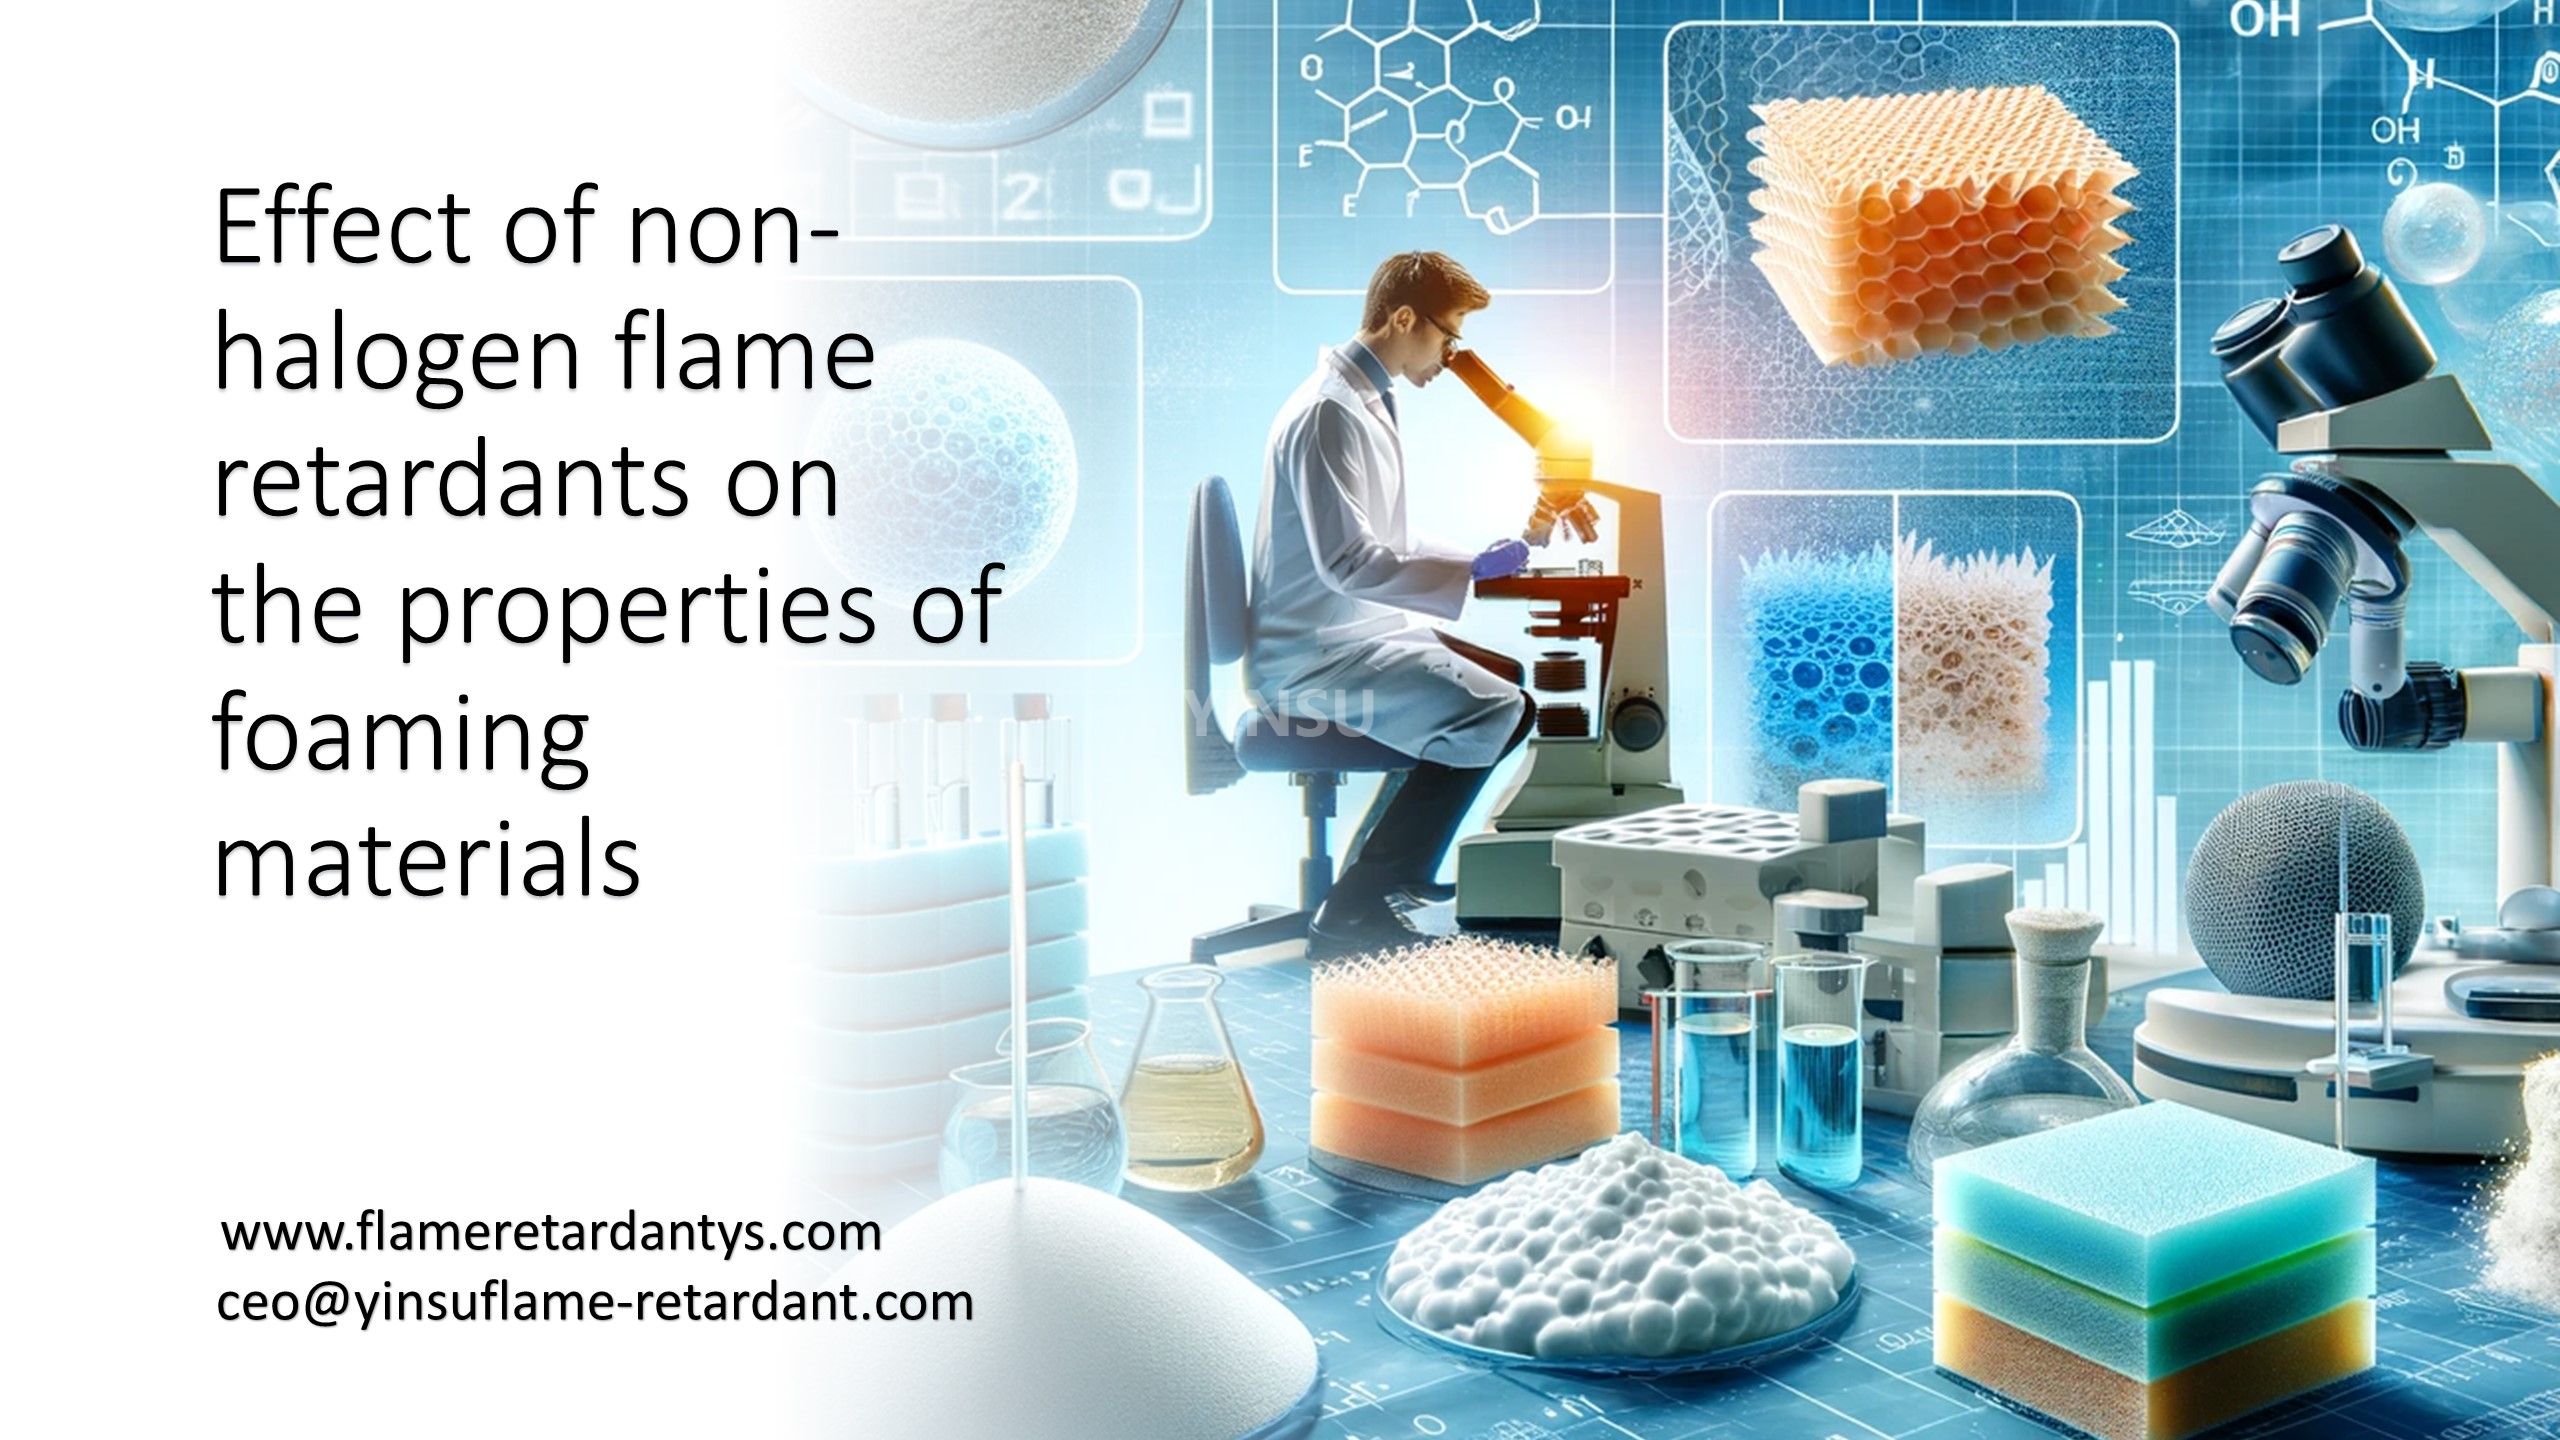 3.3 Effect of non-halogen flame retardants on the properties of foaming materials